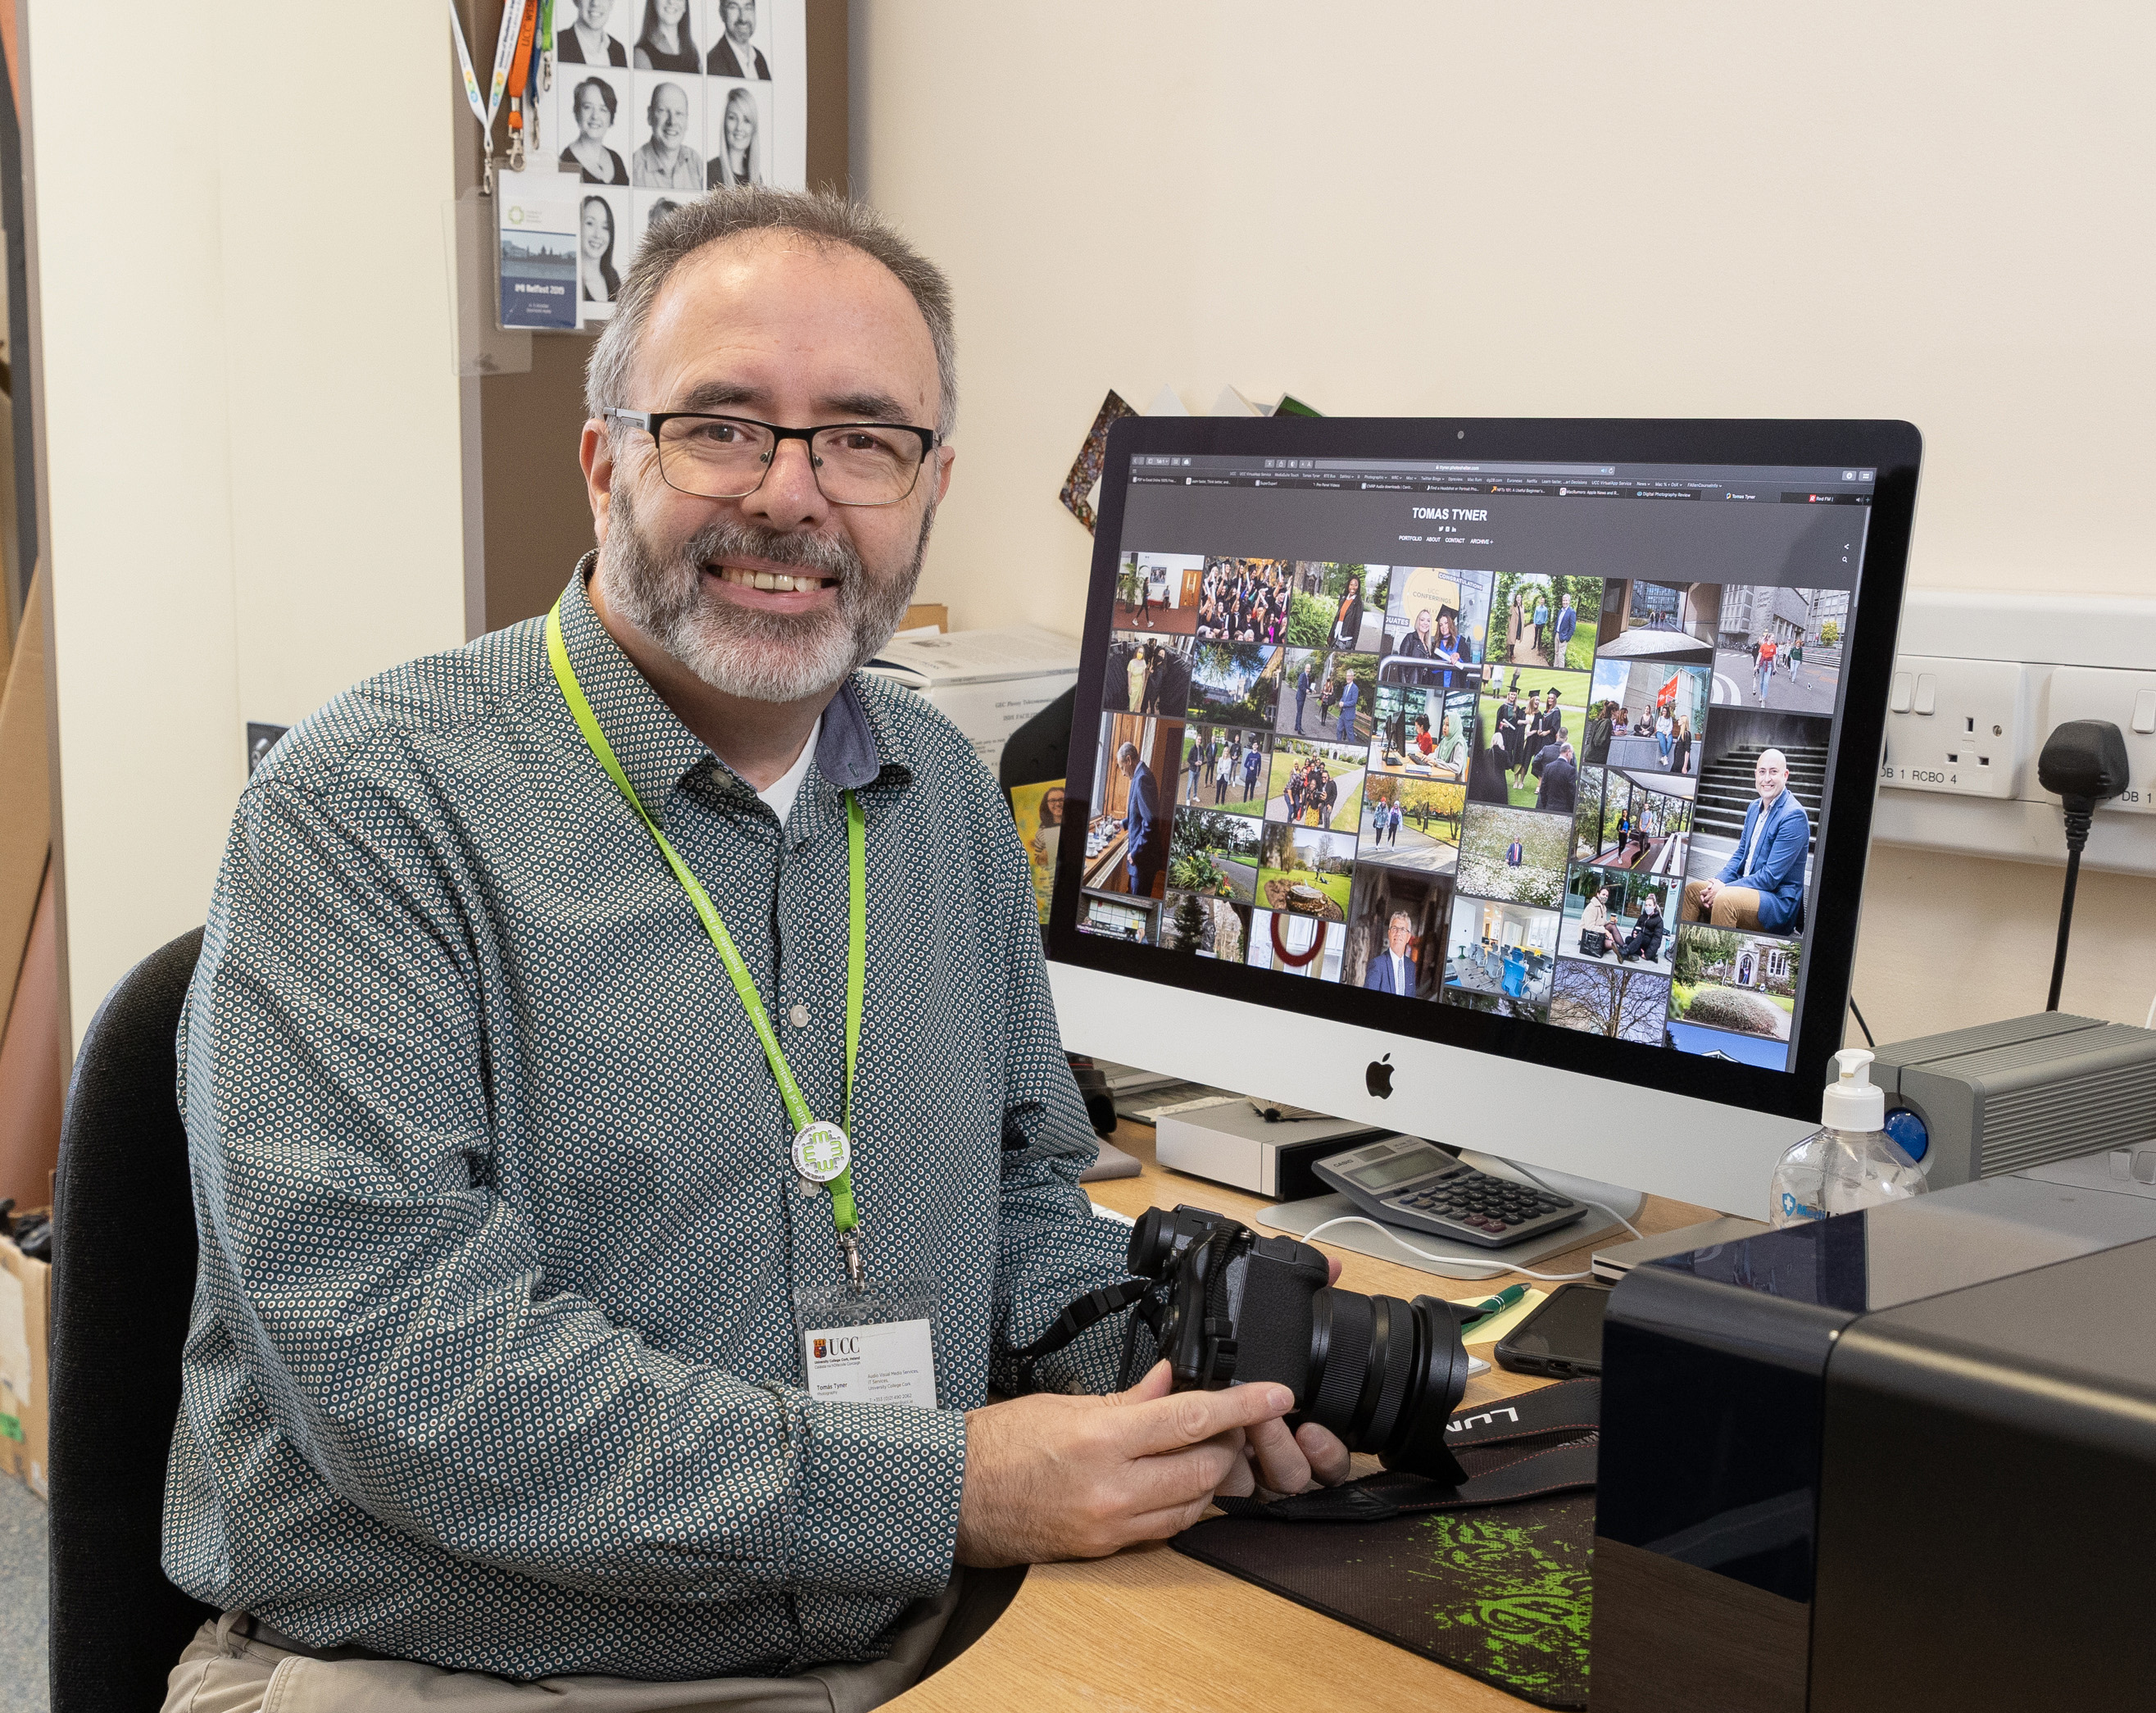 IT Services Staff Spotlight: Tomas Tyner, University Photographer 